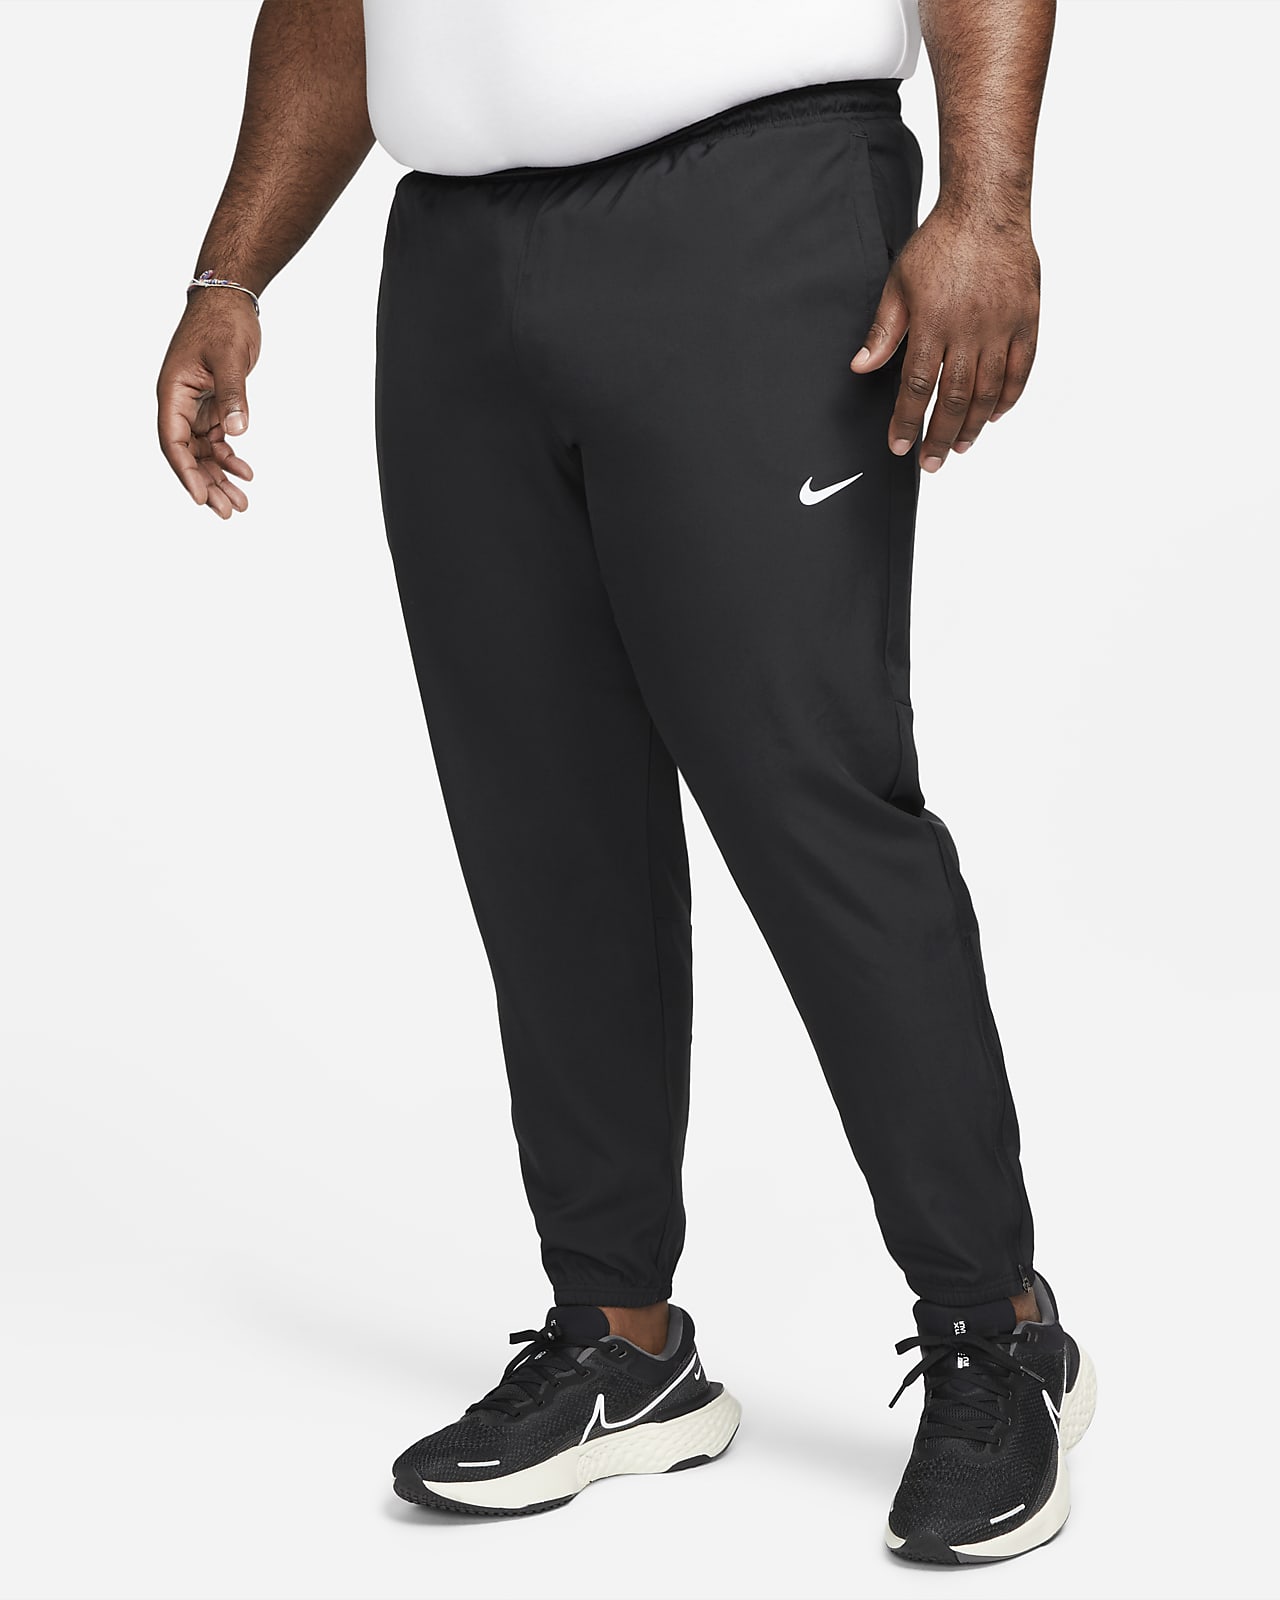 Nike Men's Woven Basketball Trousers. Nike LU